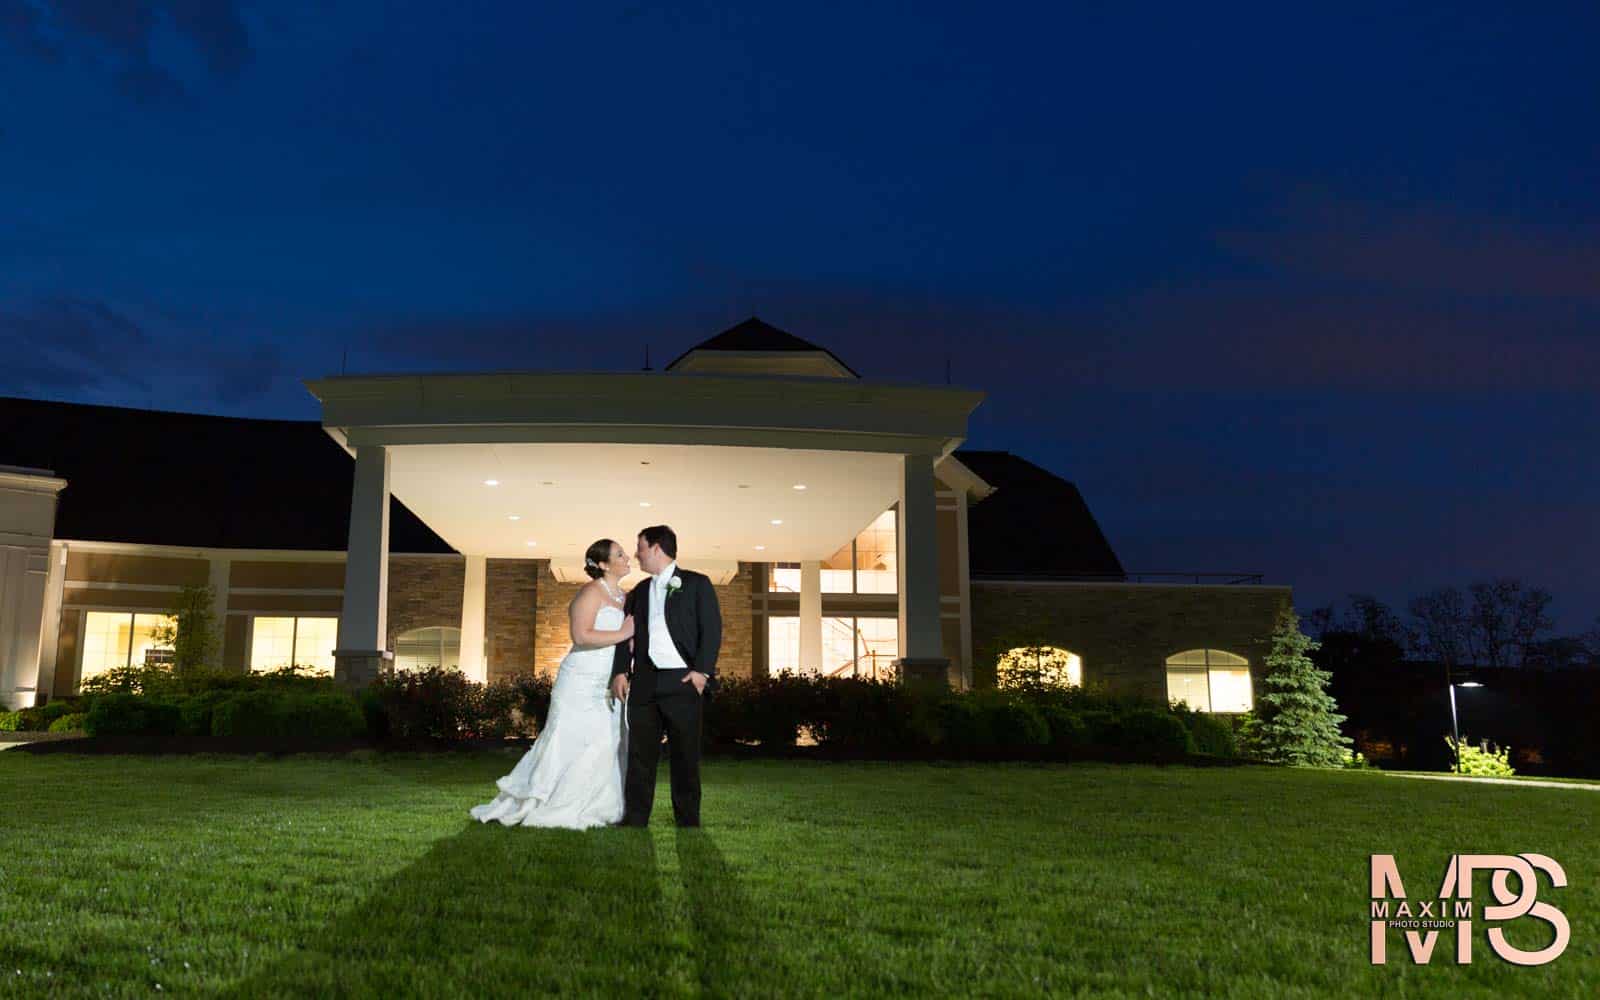 Top 10 Cincinnati Wedding Venues, Top 10 Cincinnati Wedding Venues